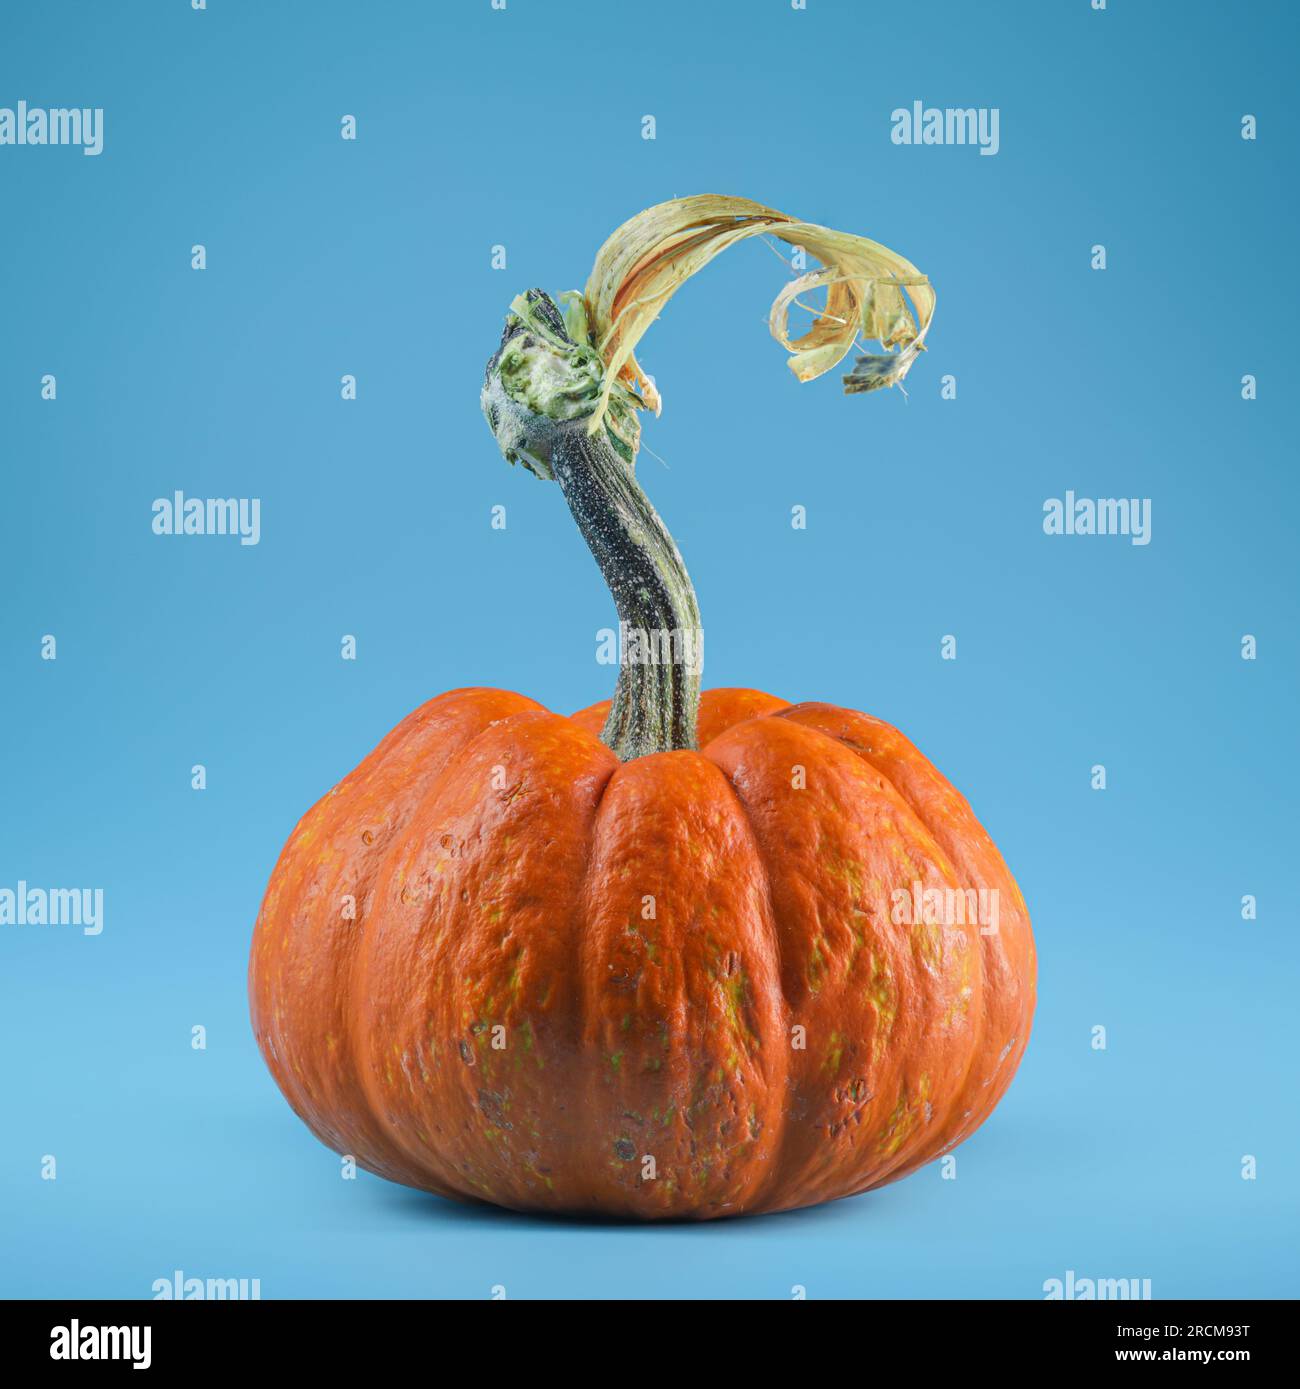 Mini orange pumpkin with stem for Halloween on blue background. Stock Photo